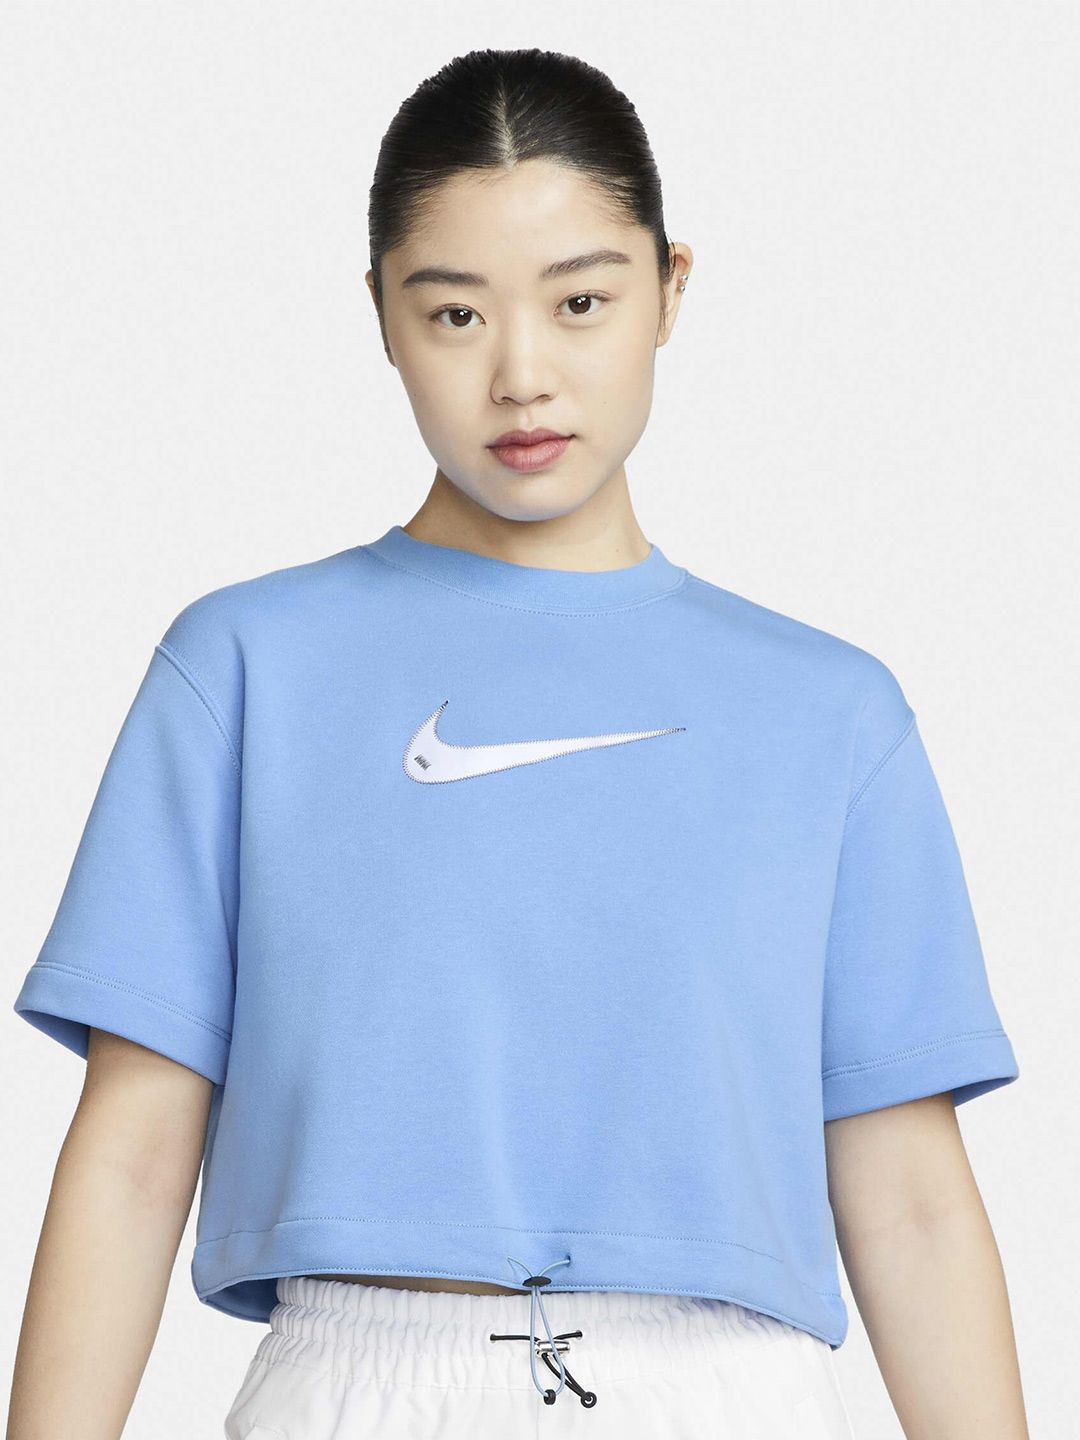 Nike Sportswear Swoosh Short-Sleeve Crop Top Price in India